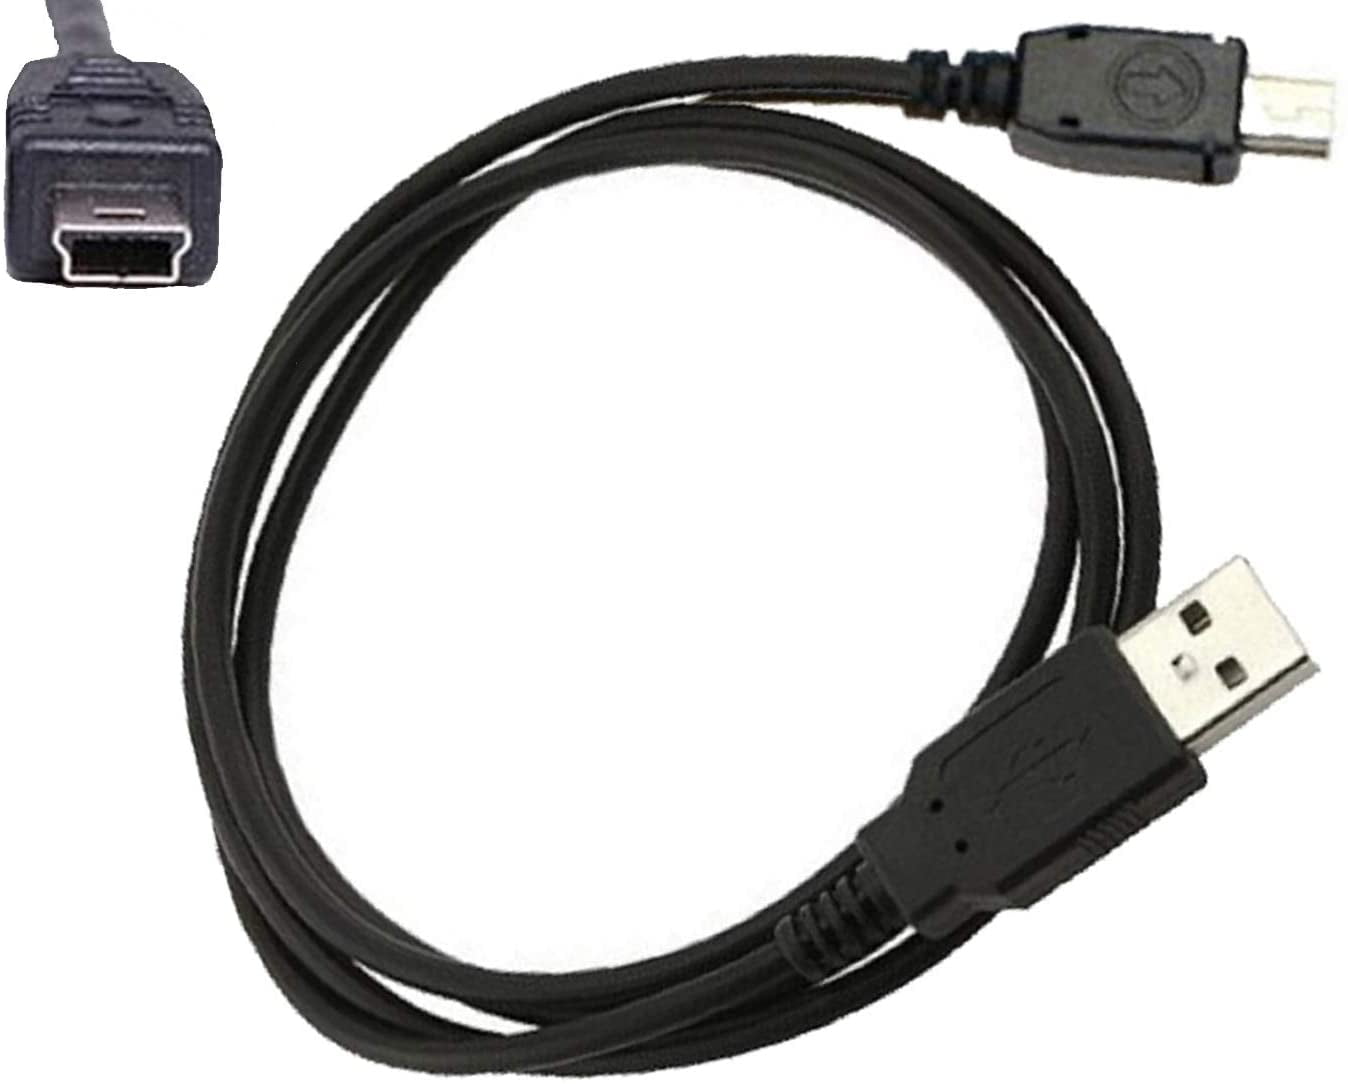 USB Cable Data Sync Cord For WD WD500H1U-00 WD5000H1U-00 My Book Essential 500GB 